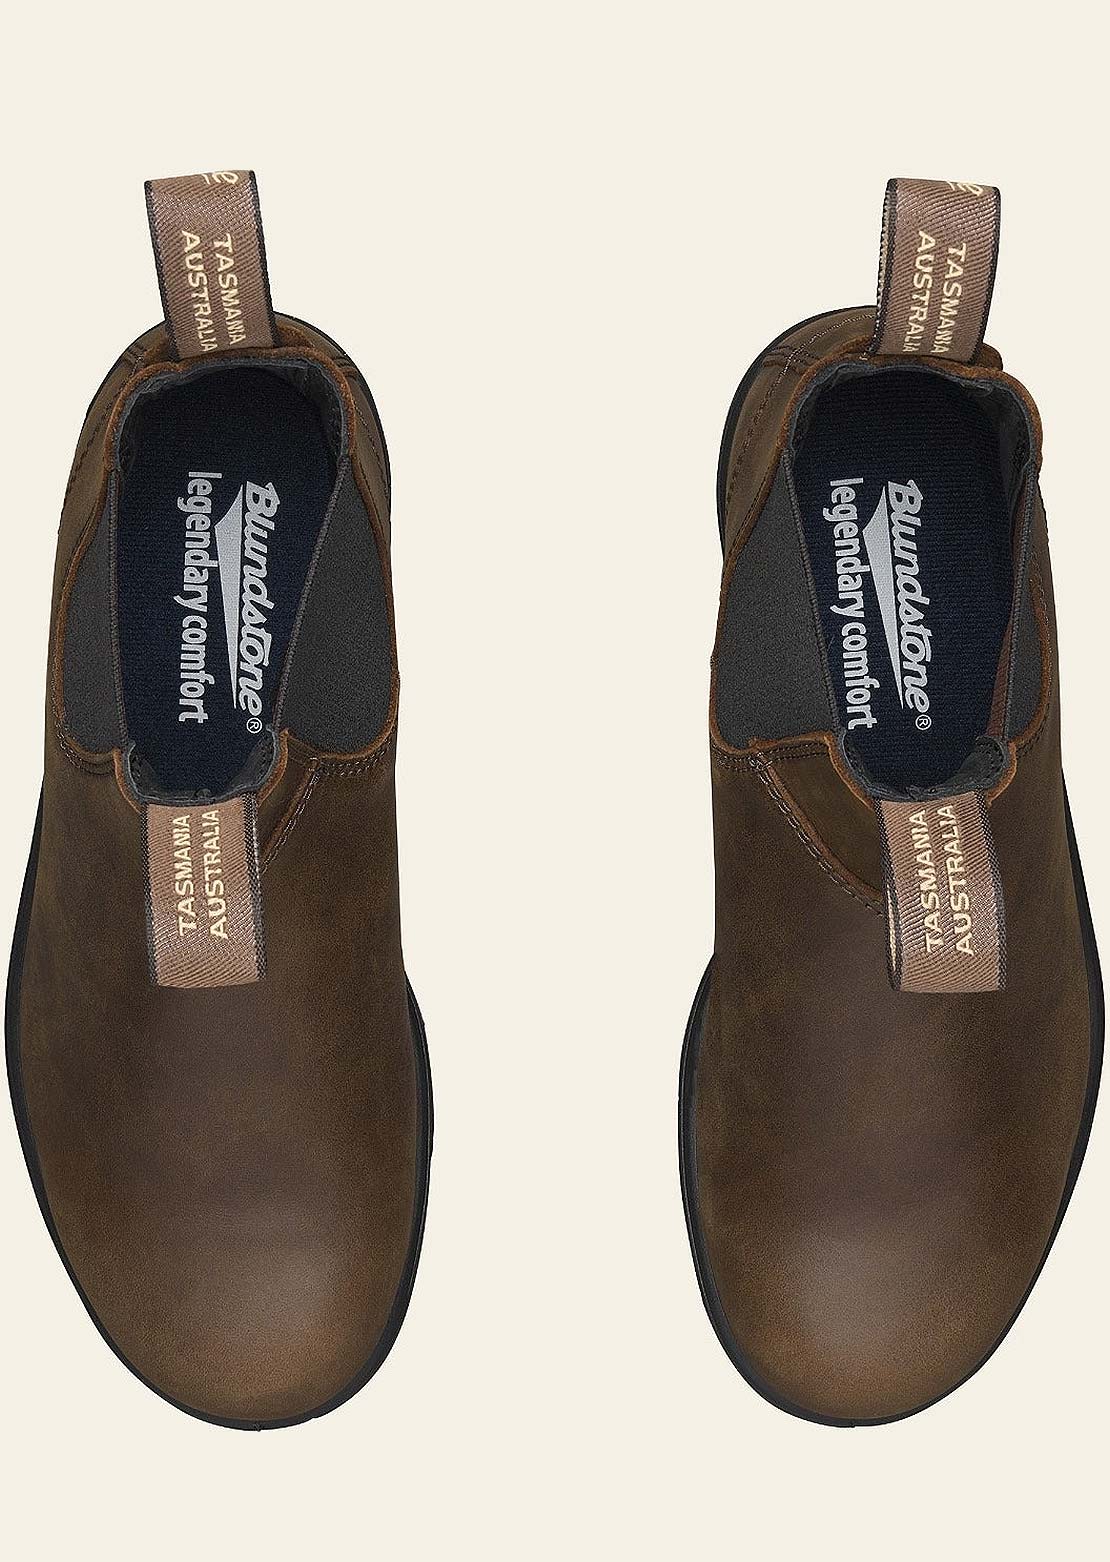 Blundstone 1609 Original Boots Antique Brown